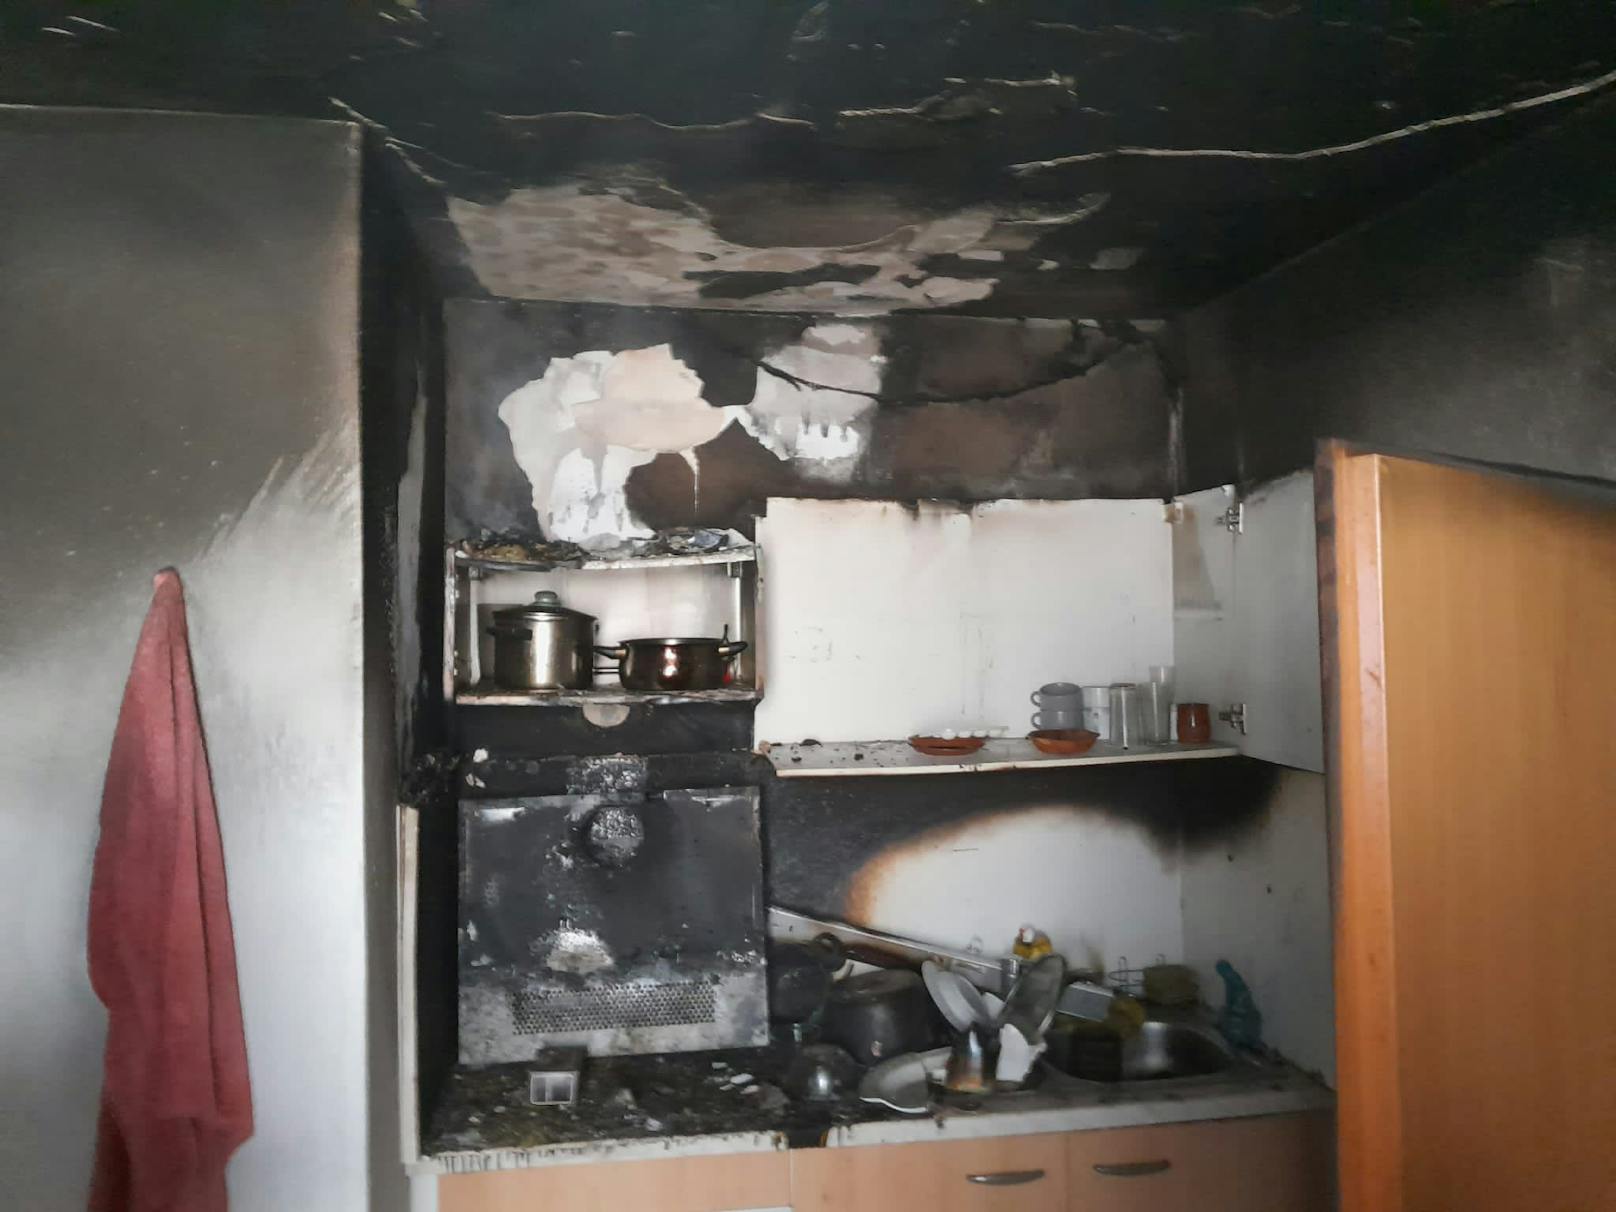 Mann (25) isst Kroketten, dann steht Küche in Flammen